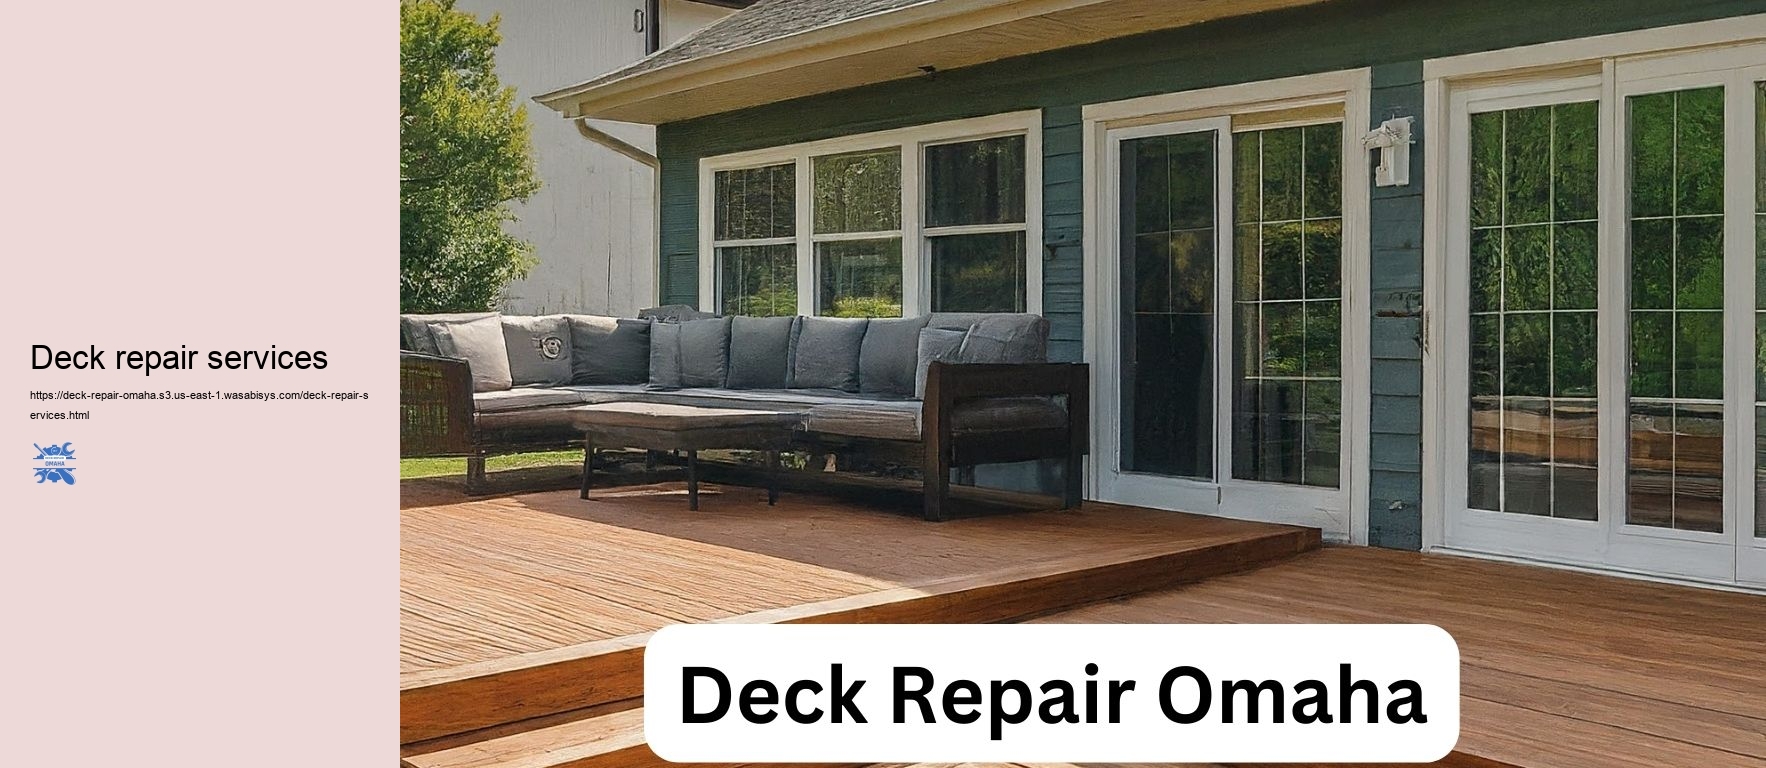 Deck repair services